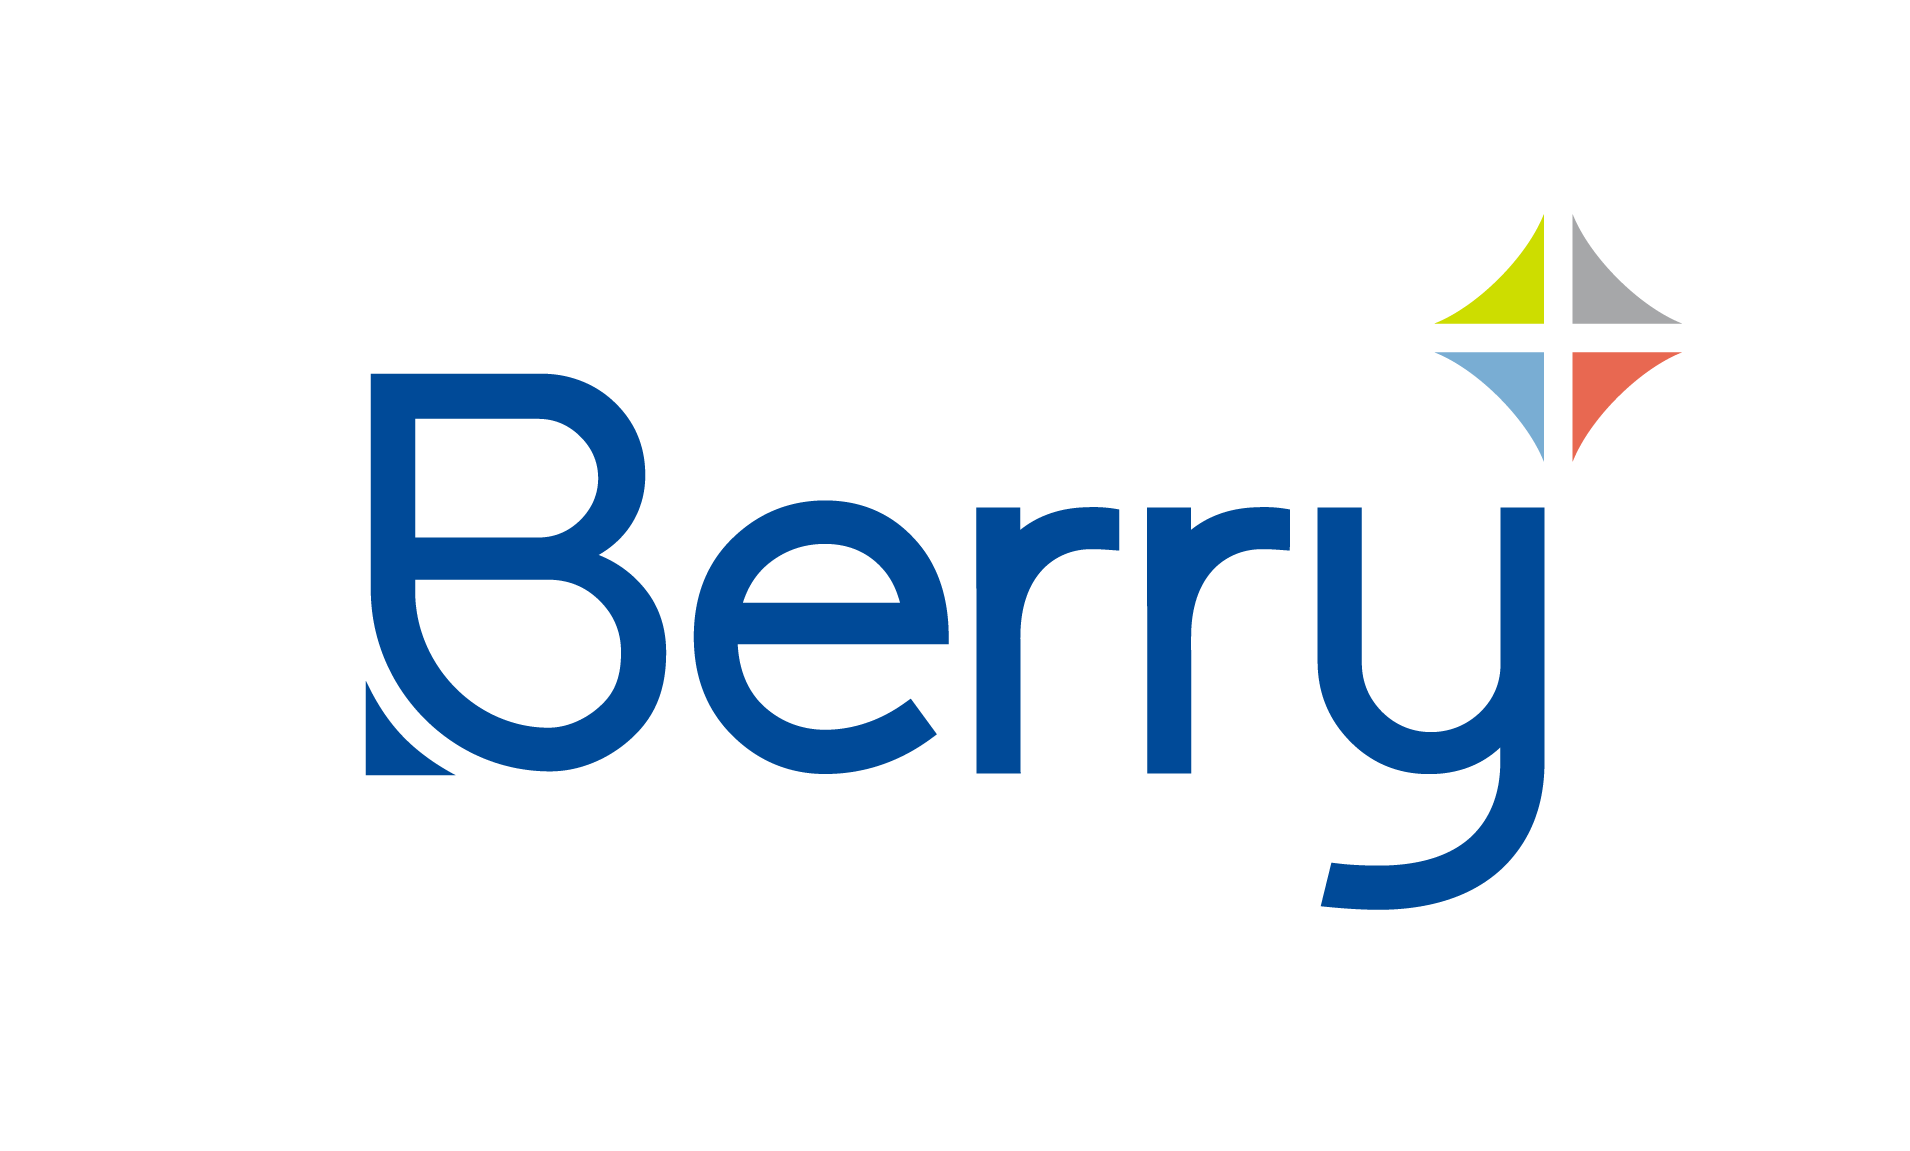 Berry Corp